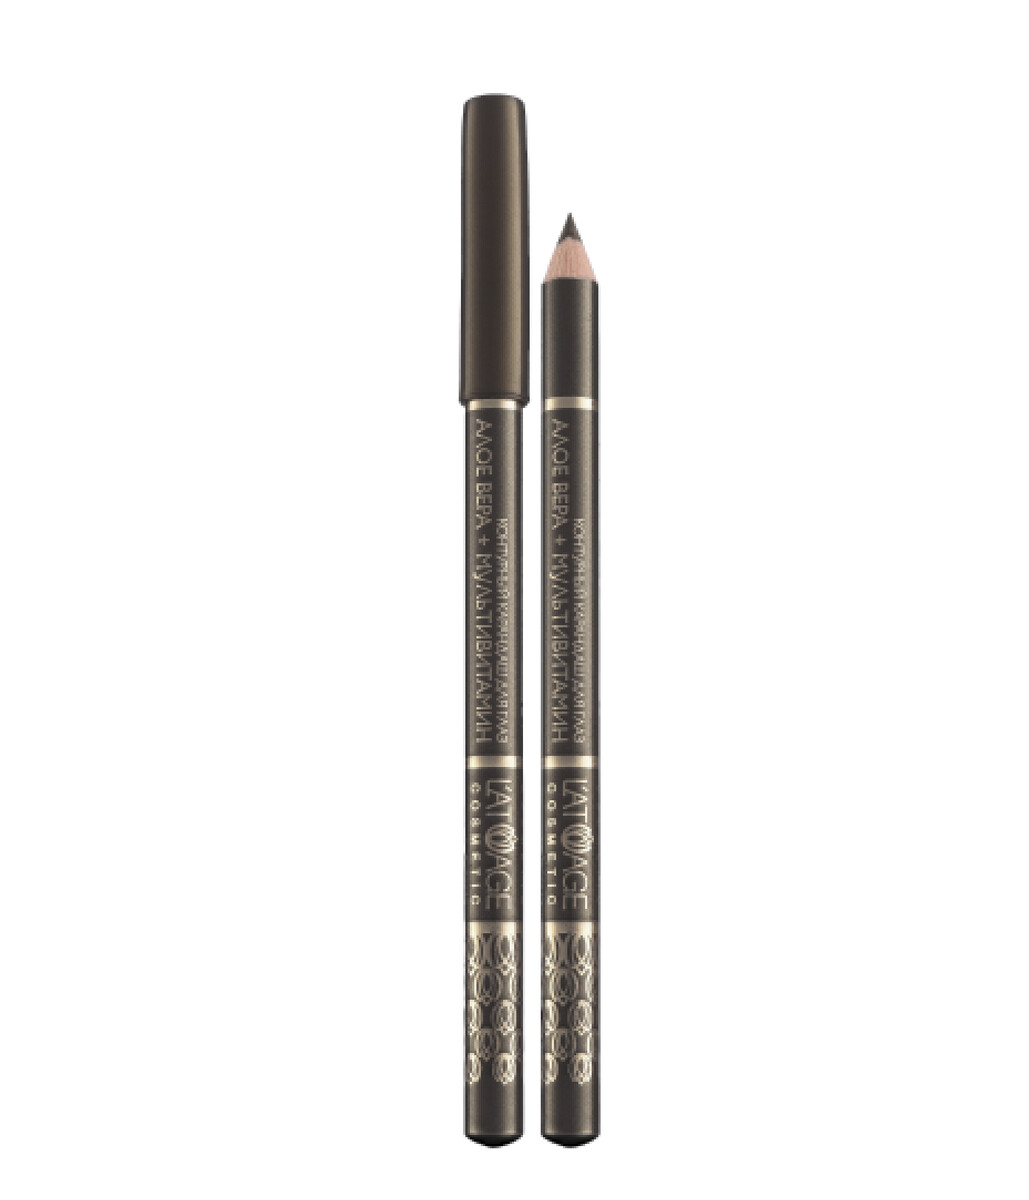 Контурный карандаш для глаз latuage cosmetic №41 (шоколадный) карандаш контурный для глаз lilo тон 01